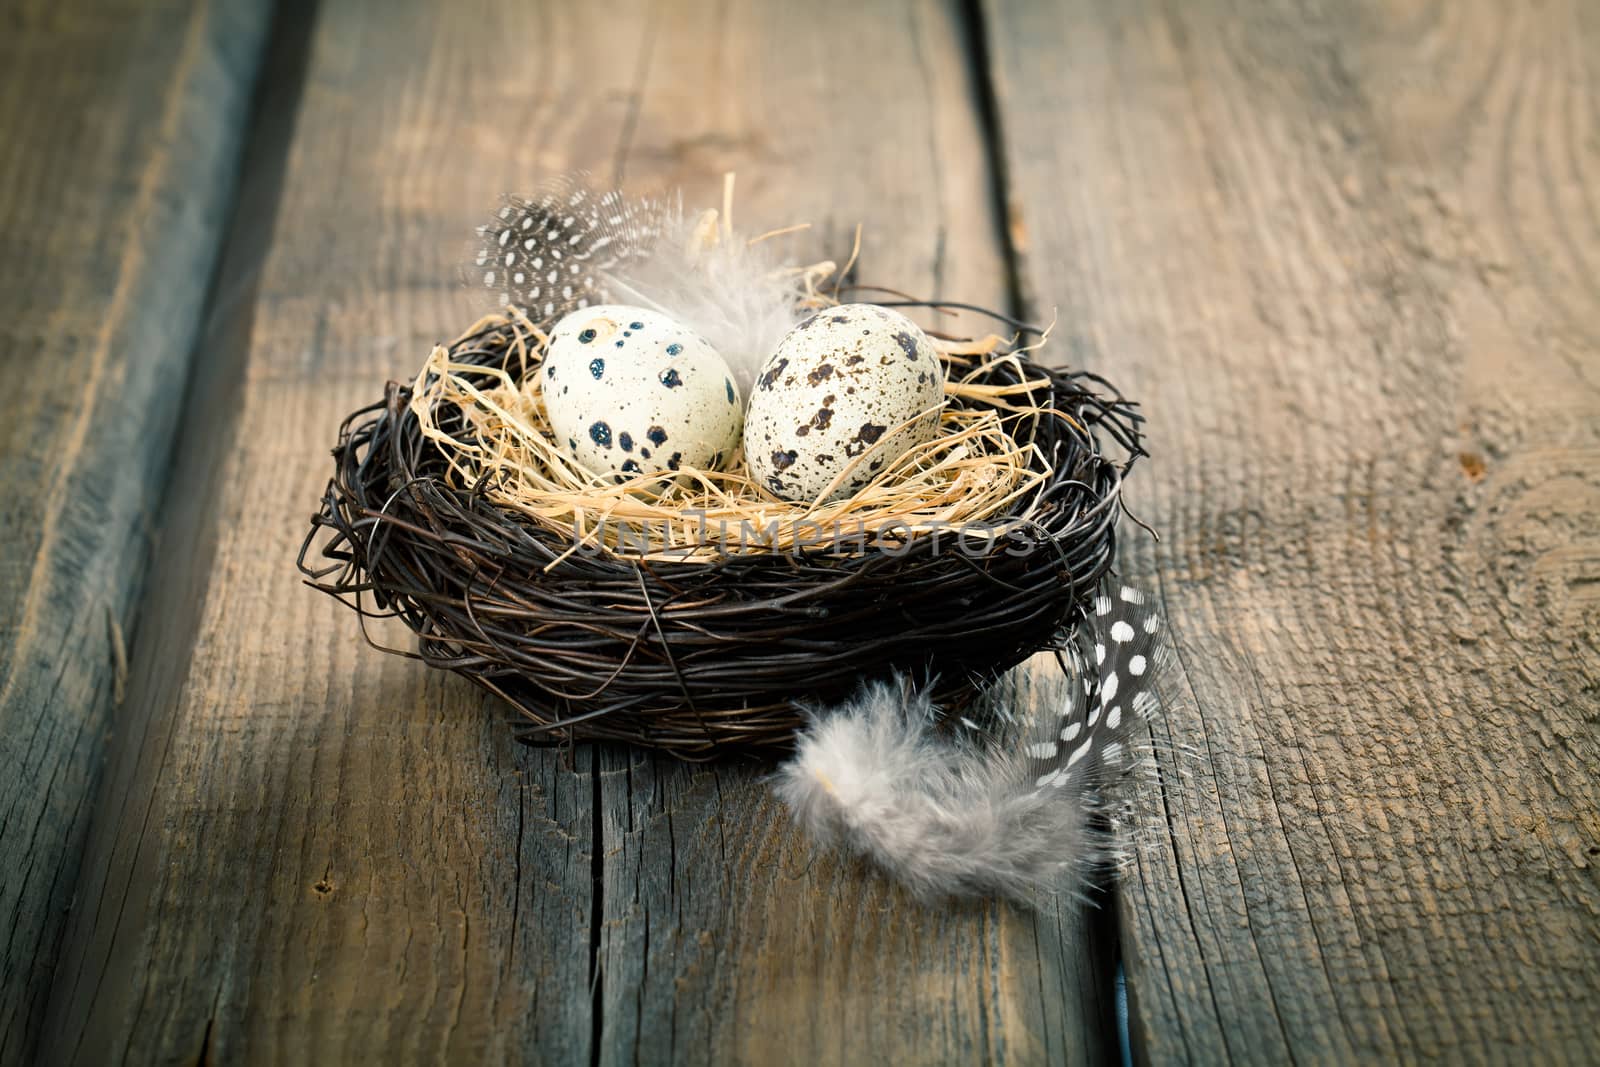 quail eggs in nest on wooden background by motorolka